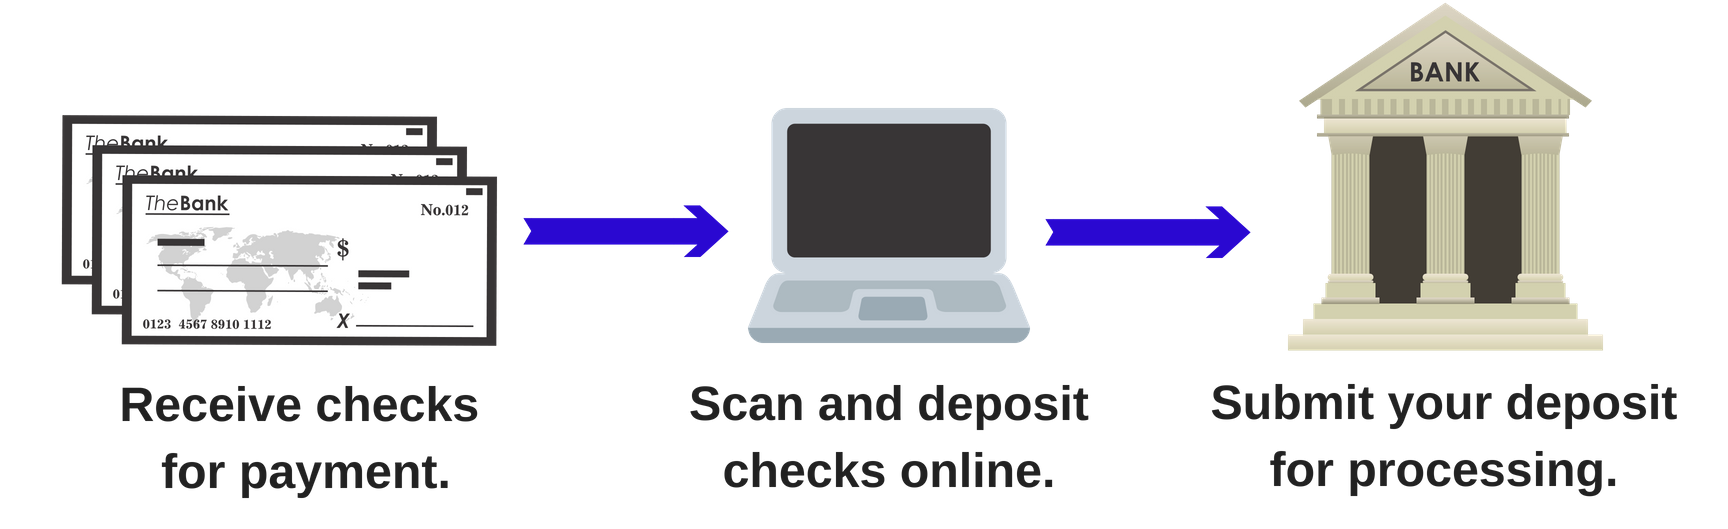 Merchant Remote Deposit Capture Image